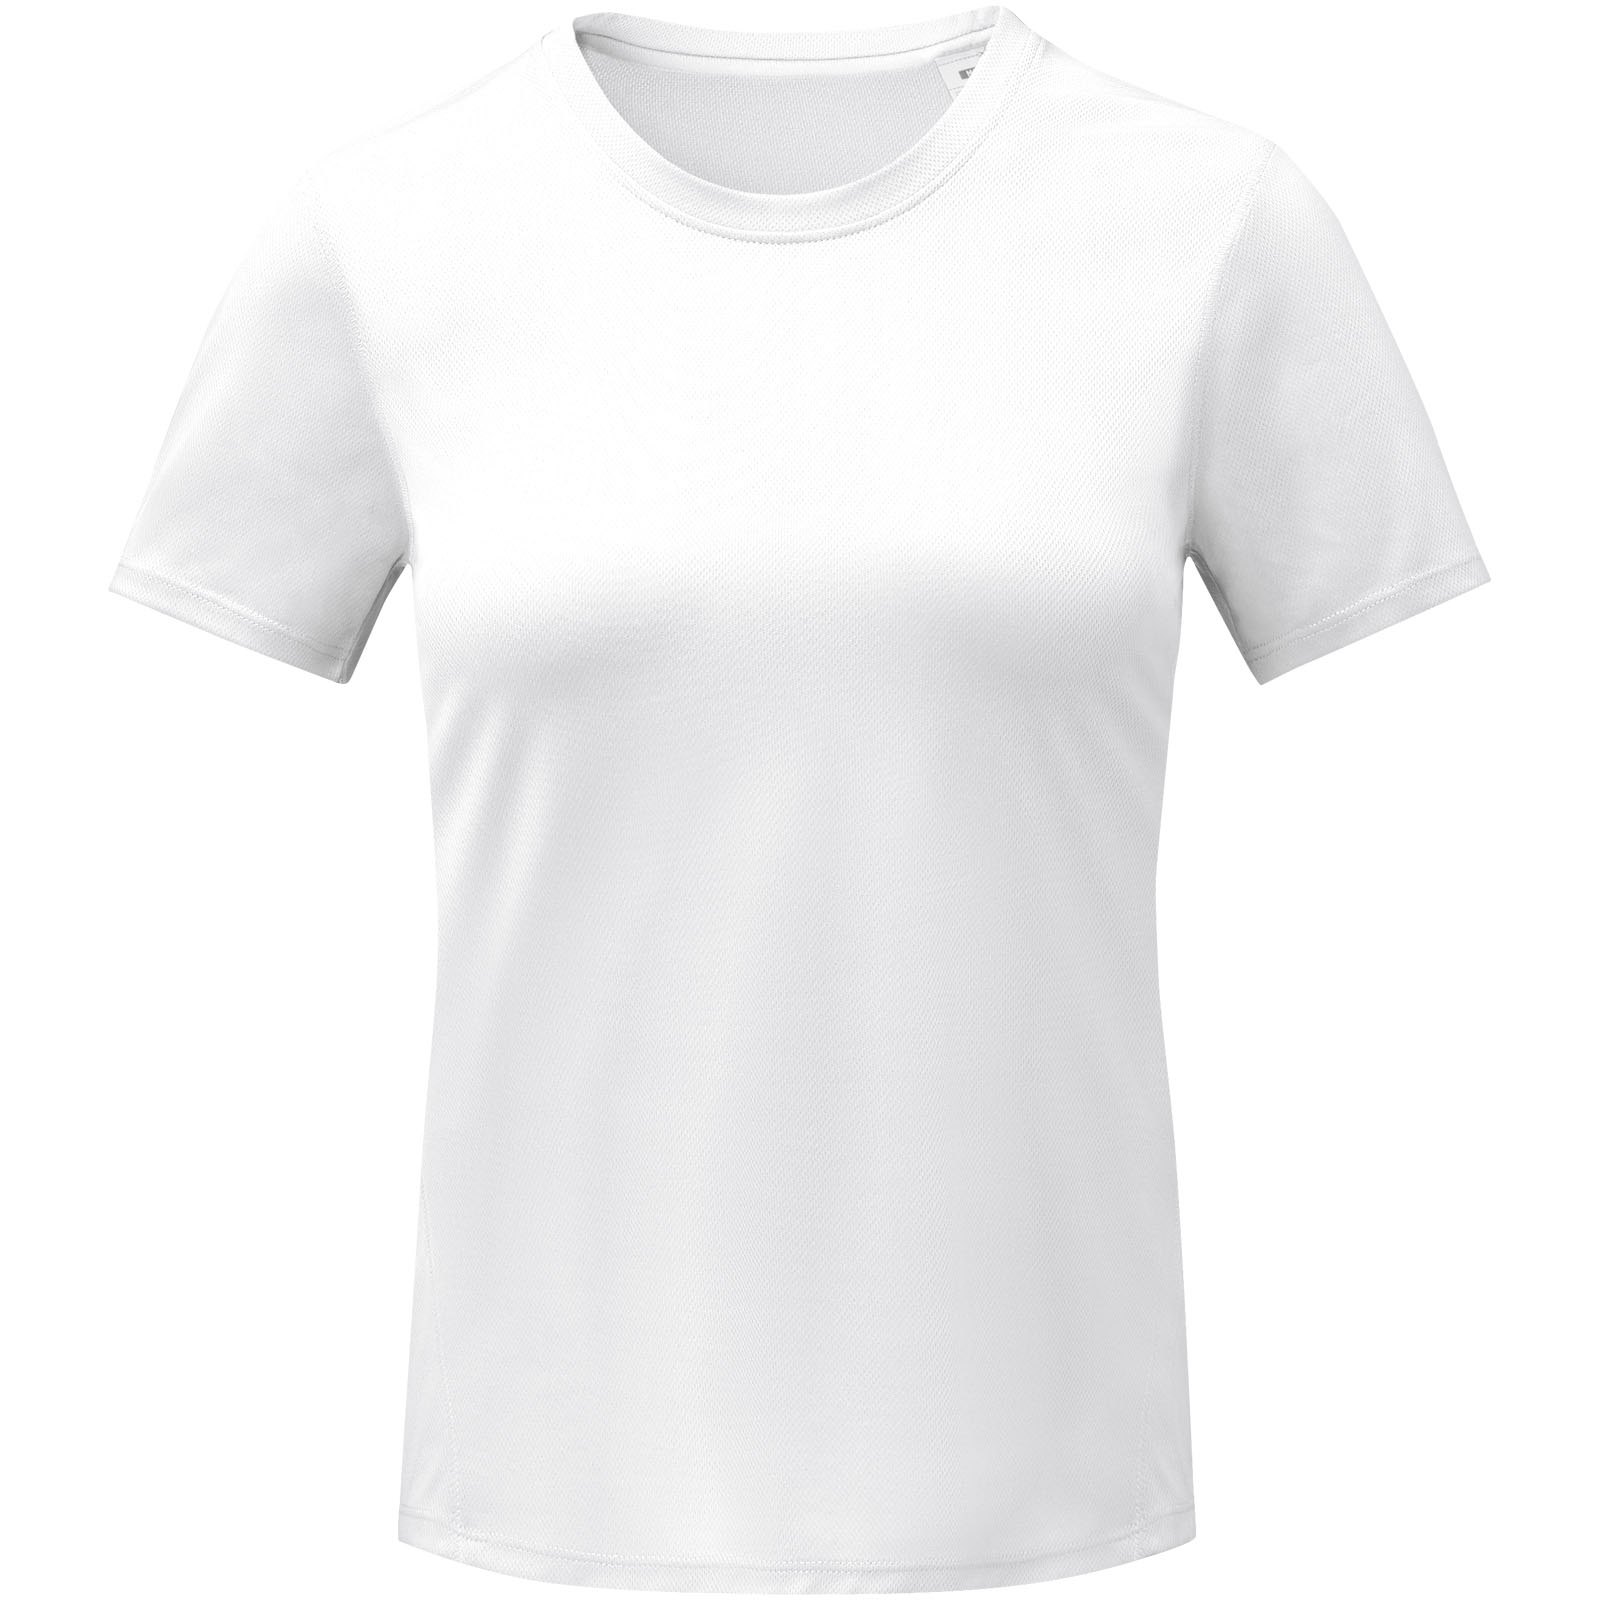 Advertising T-shirts - Kratos short sleeve women's cool fit t-shirt - 1